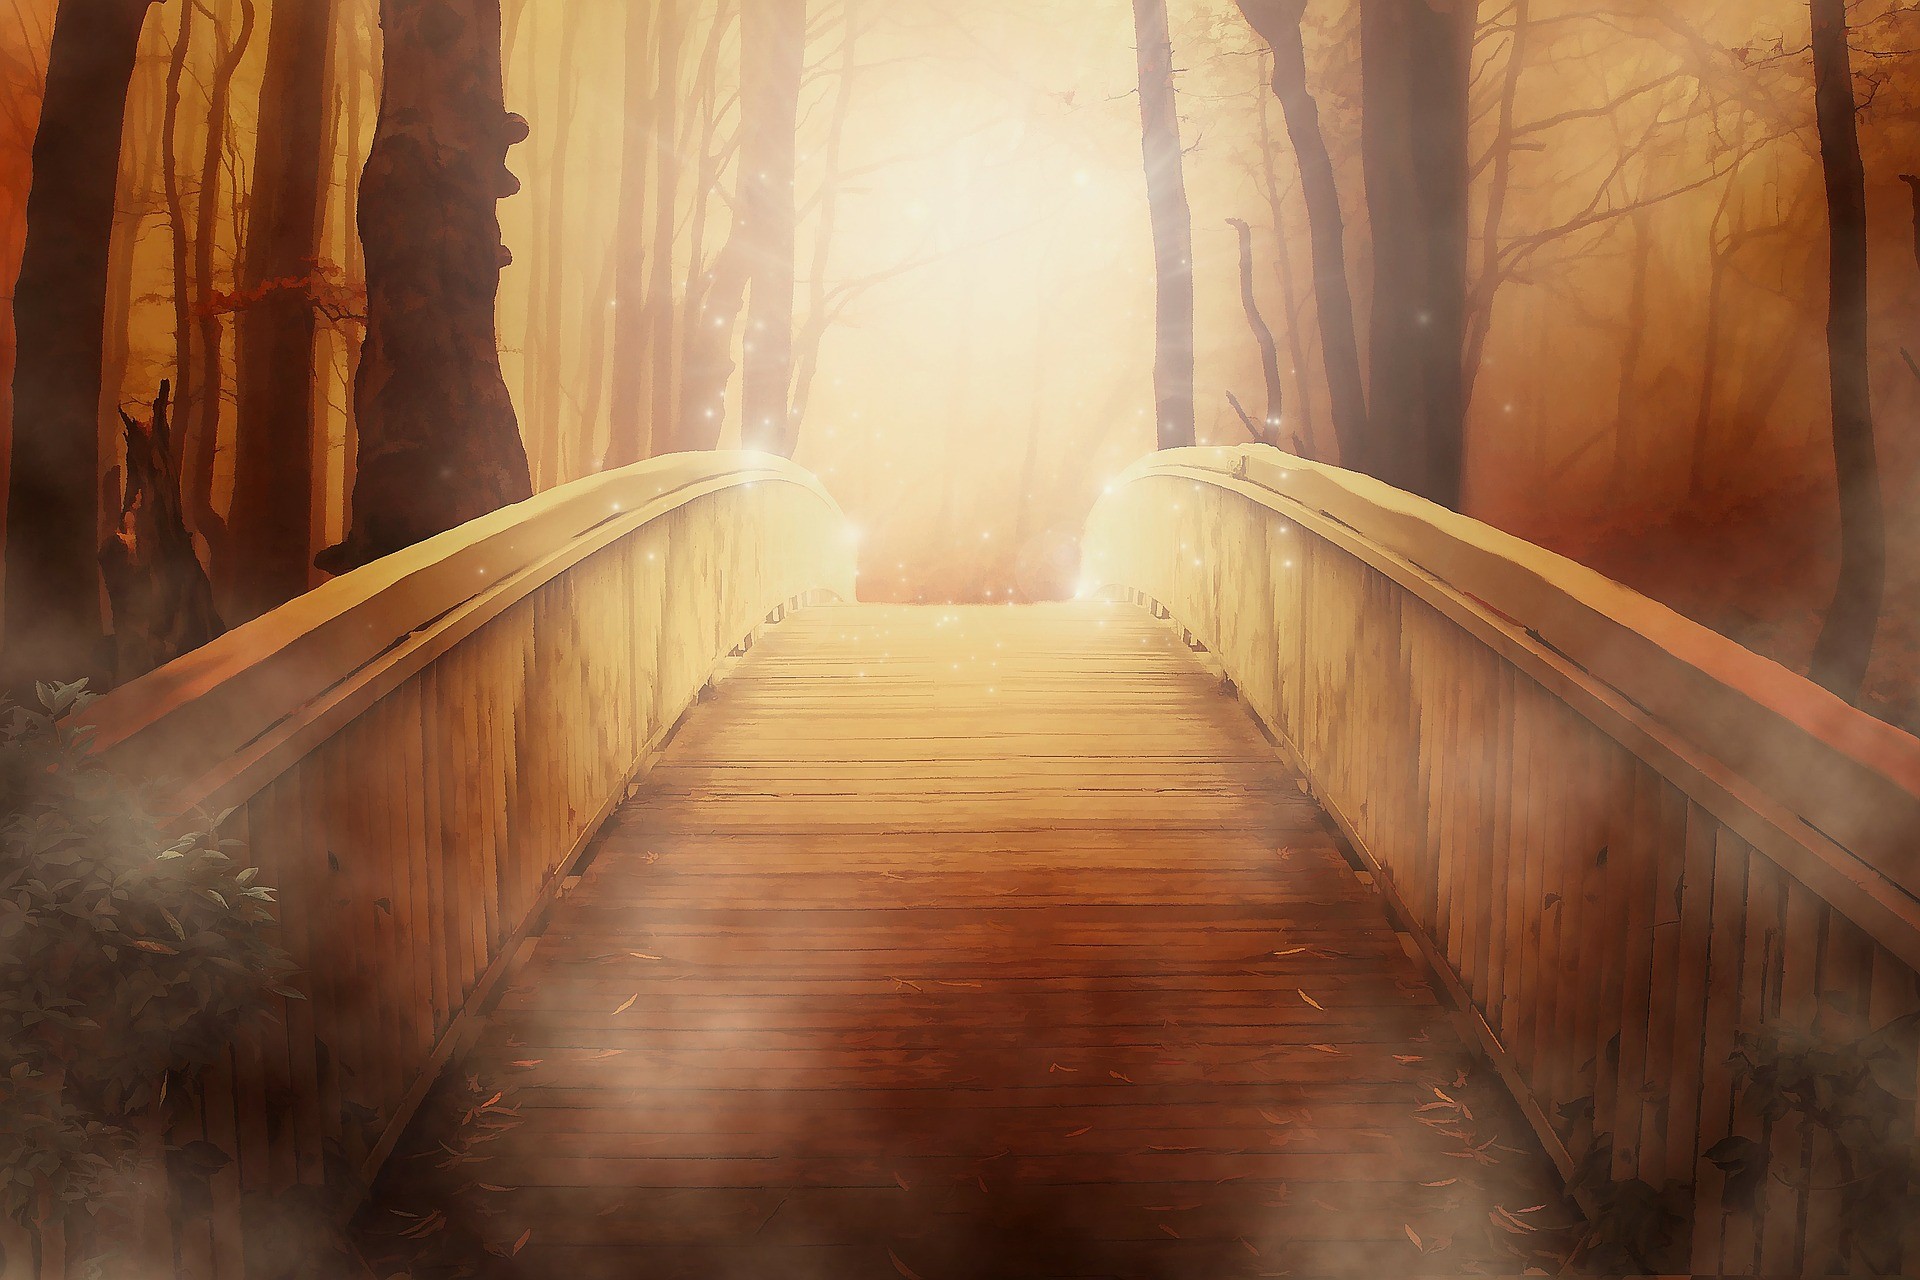 footbridge in the woods leading to sunlight